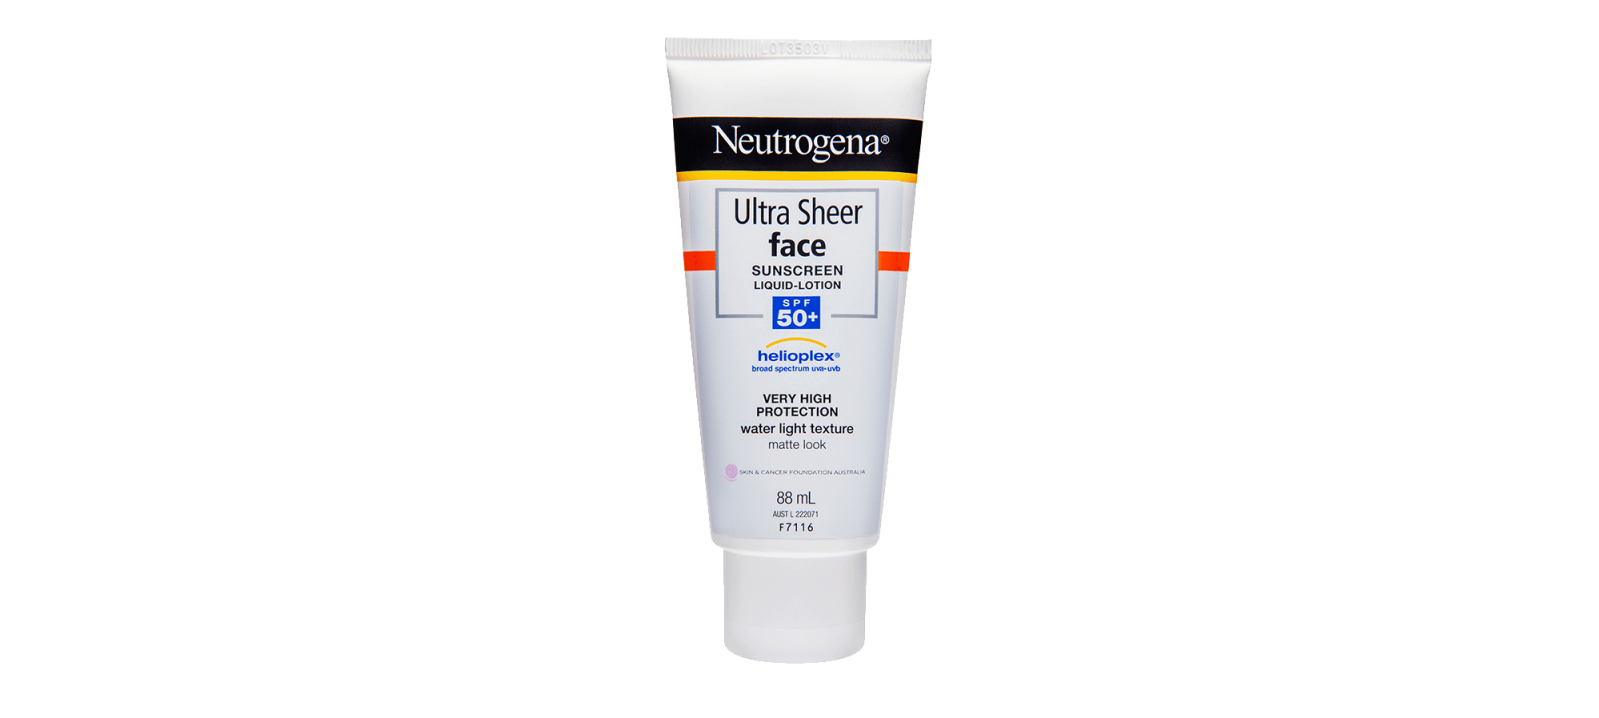 Neutrogena ultra sheer face sunscreen SPF 50+